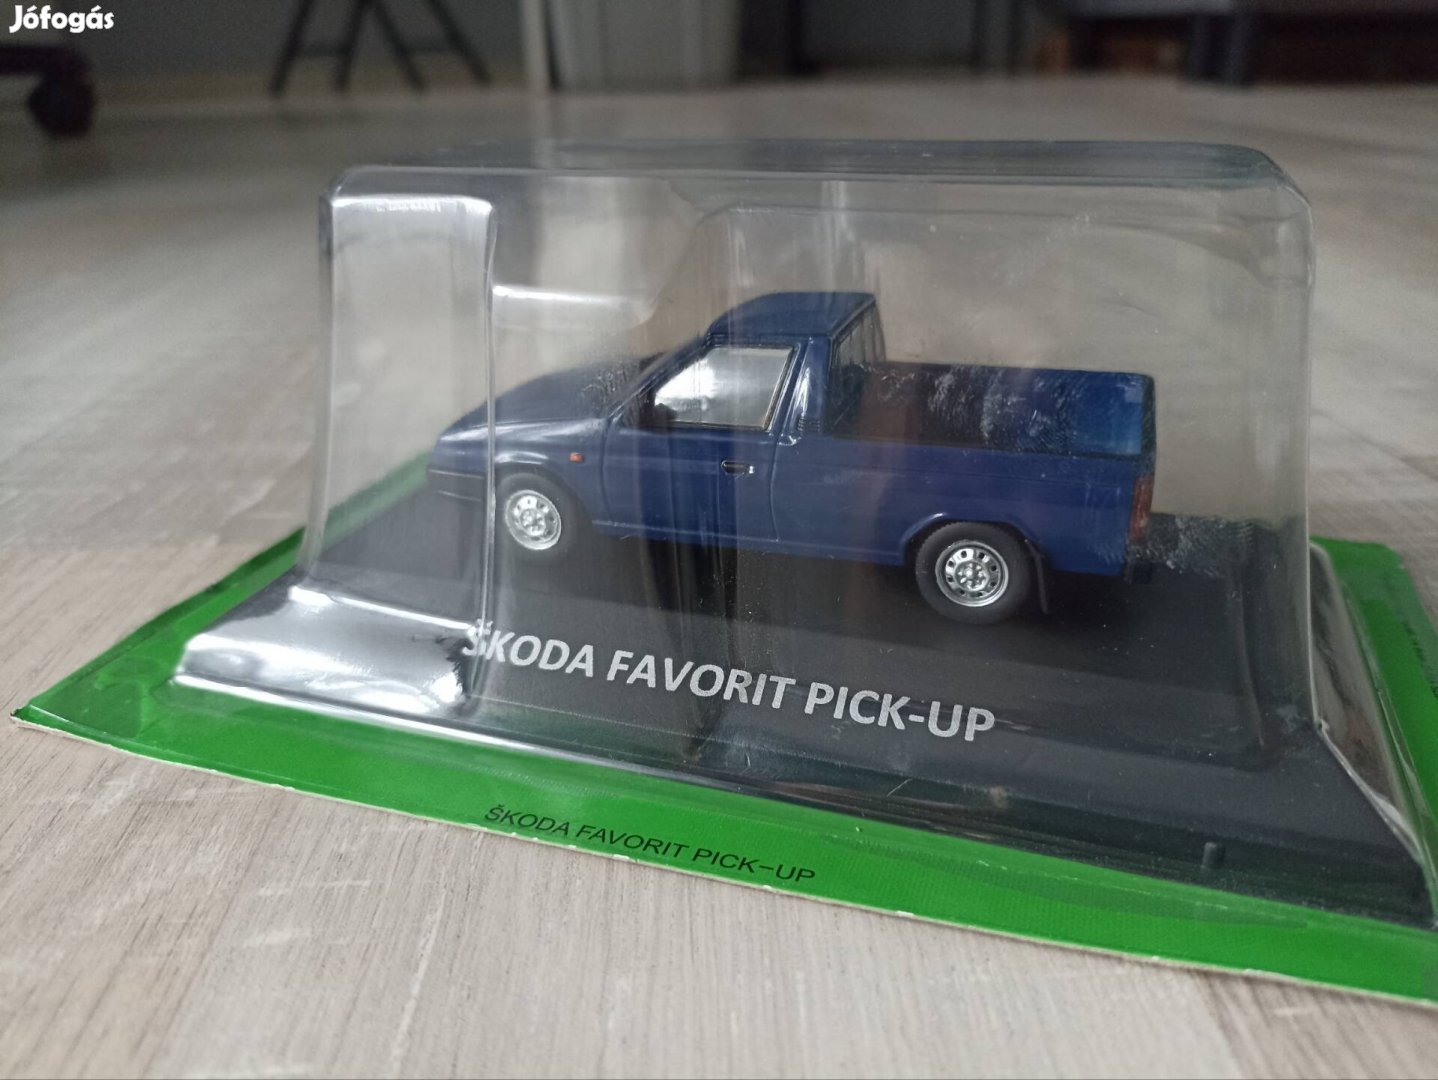 Skoda Favorit pickup 1:43 modell Kaleidoskop